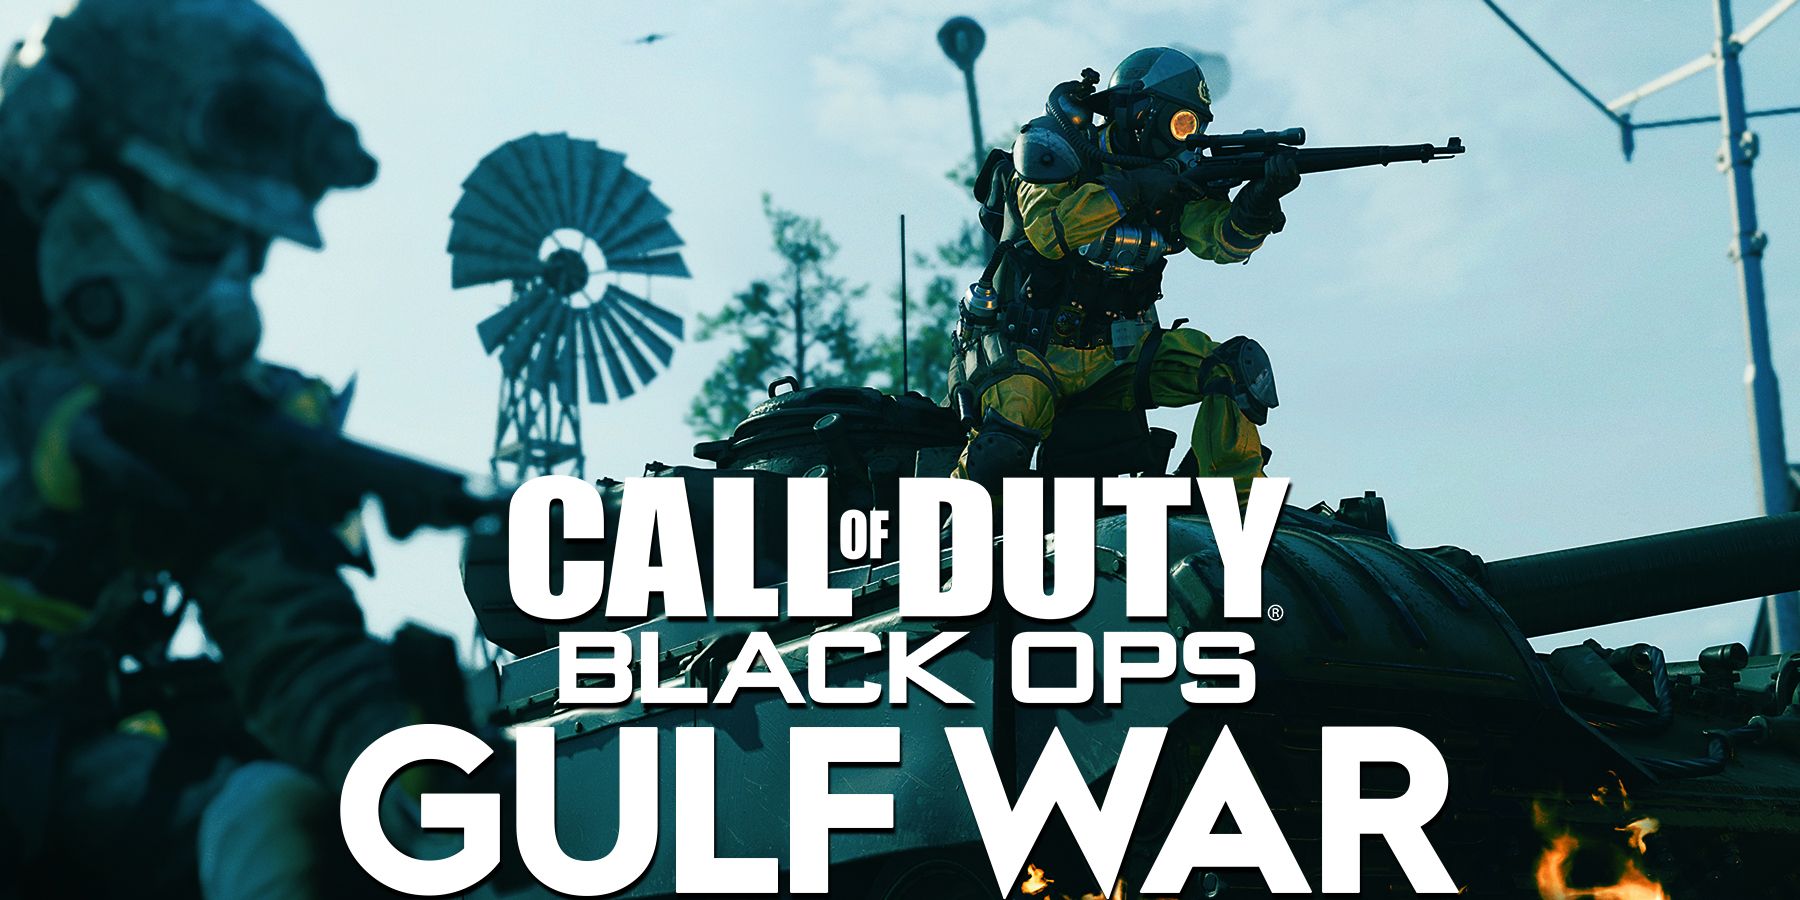 Call of Duty Black Ops Gulf War mockup logo on Antonov Cold War promo